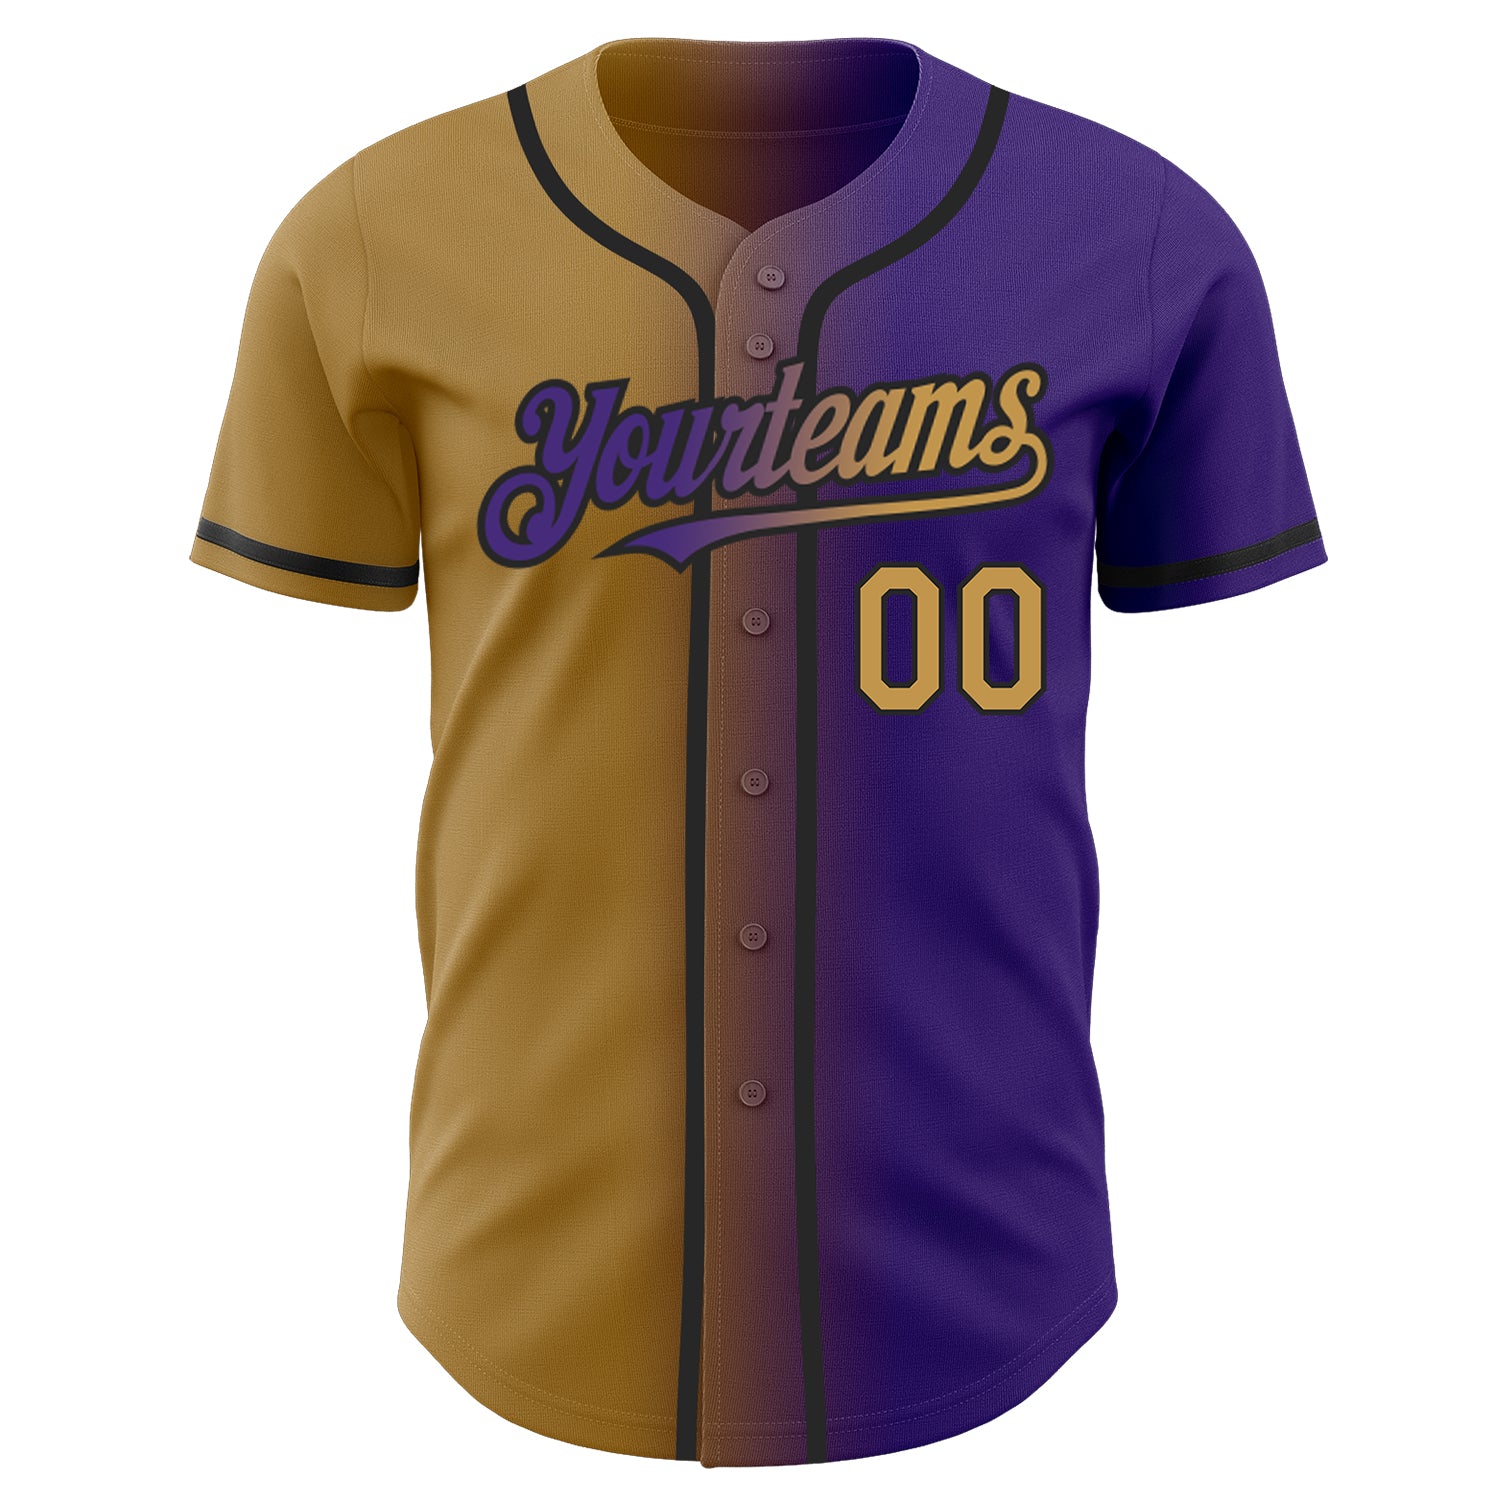 Custom Baseball Jersey Purple Yellow-Black Authentic Gradient Fashion Men's Size:L